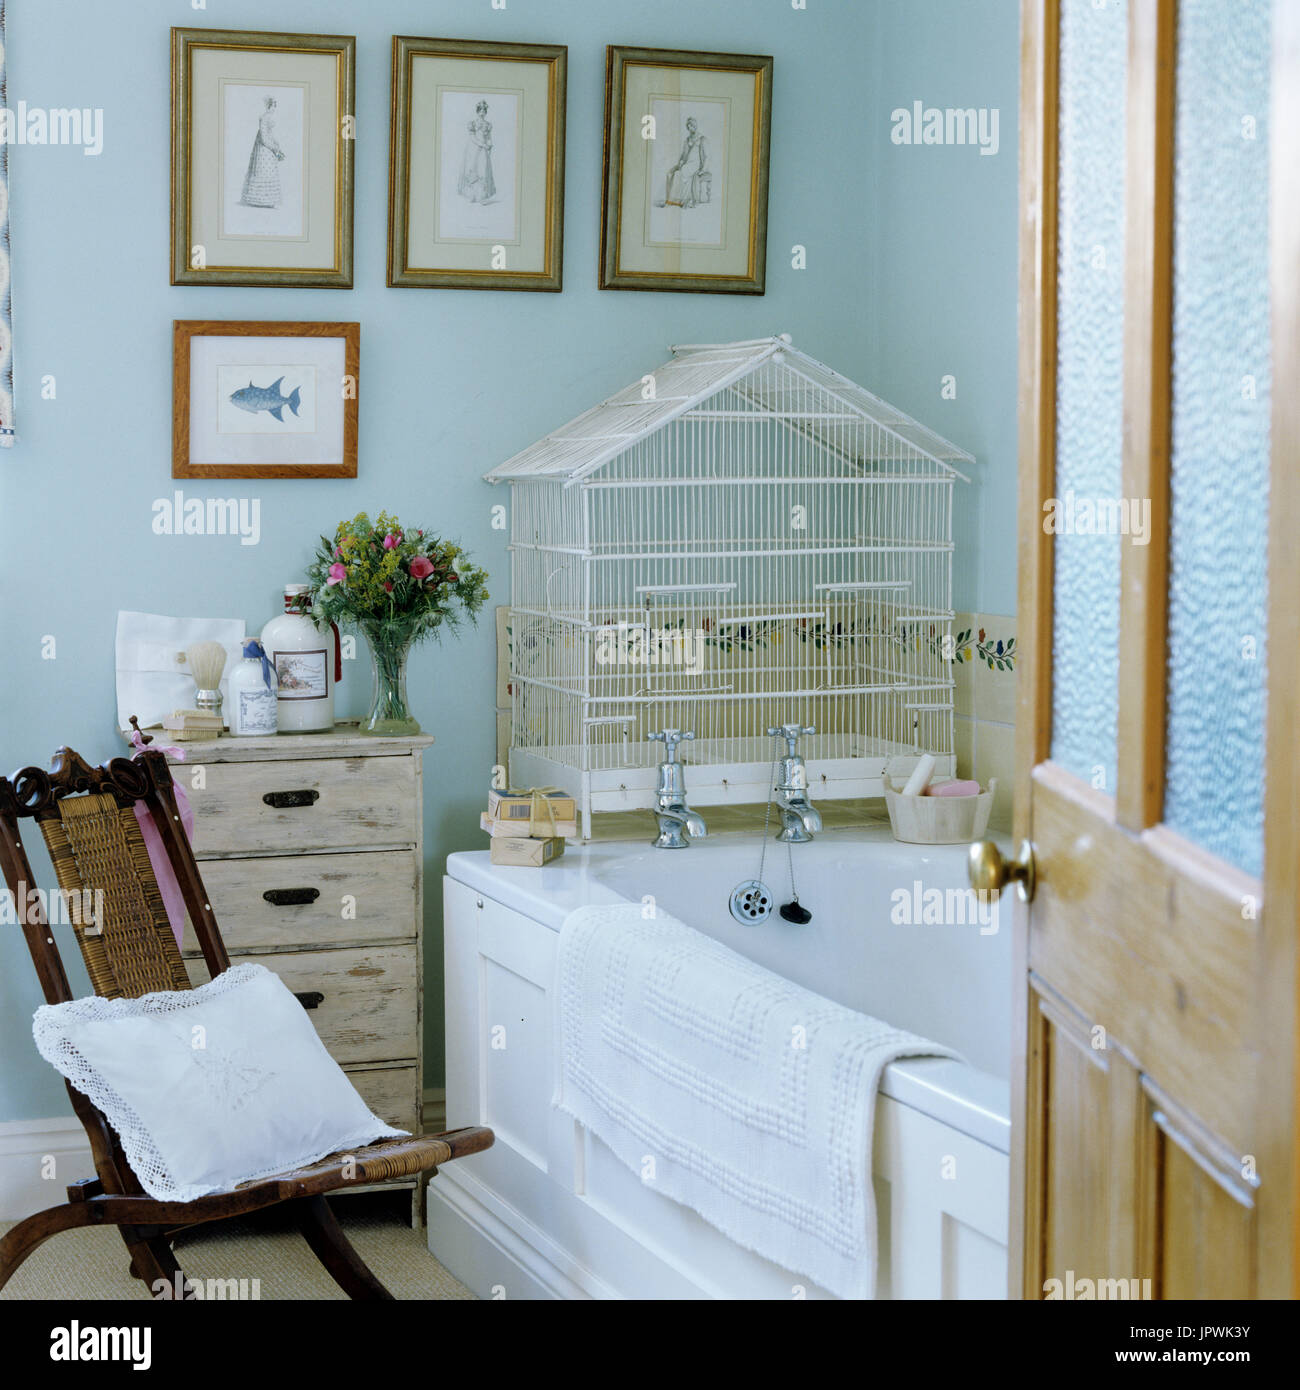 Country style bathroom with birdcage decor Stock Photo